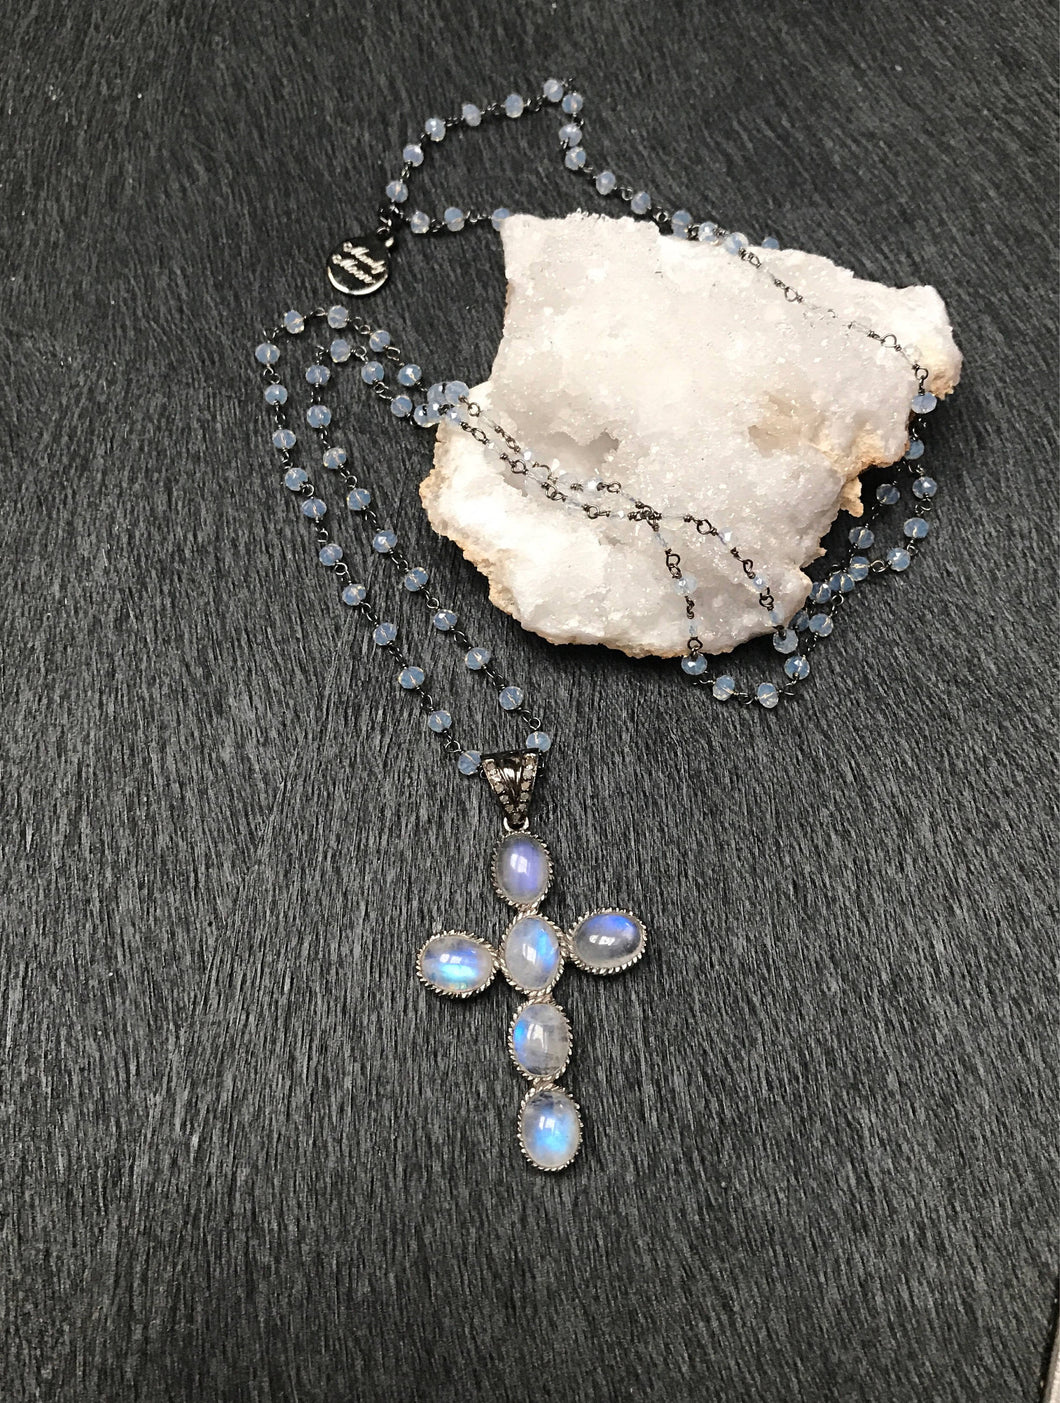 Moonstone cross pendant necklace